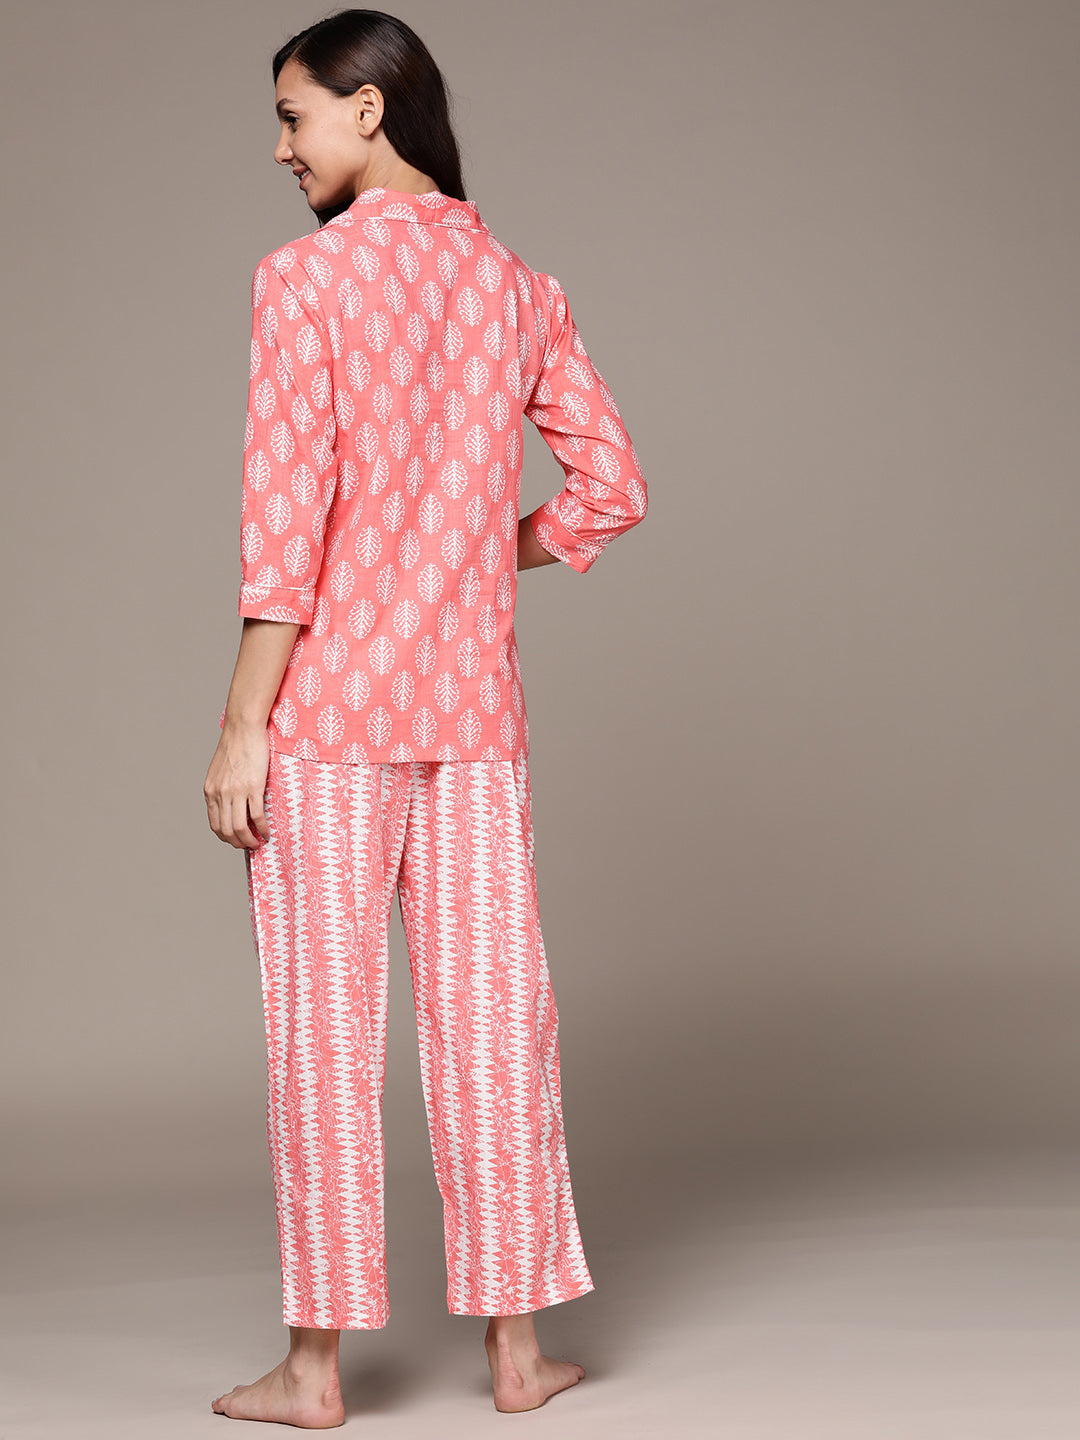 Women's's Peach Ethnic Motifs Printed Pure Cotton Night Suit